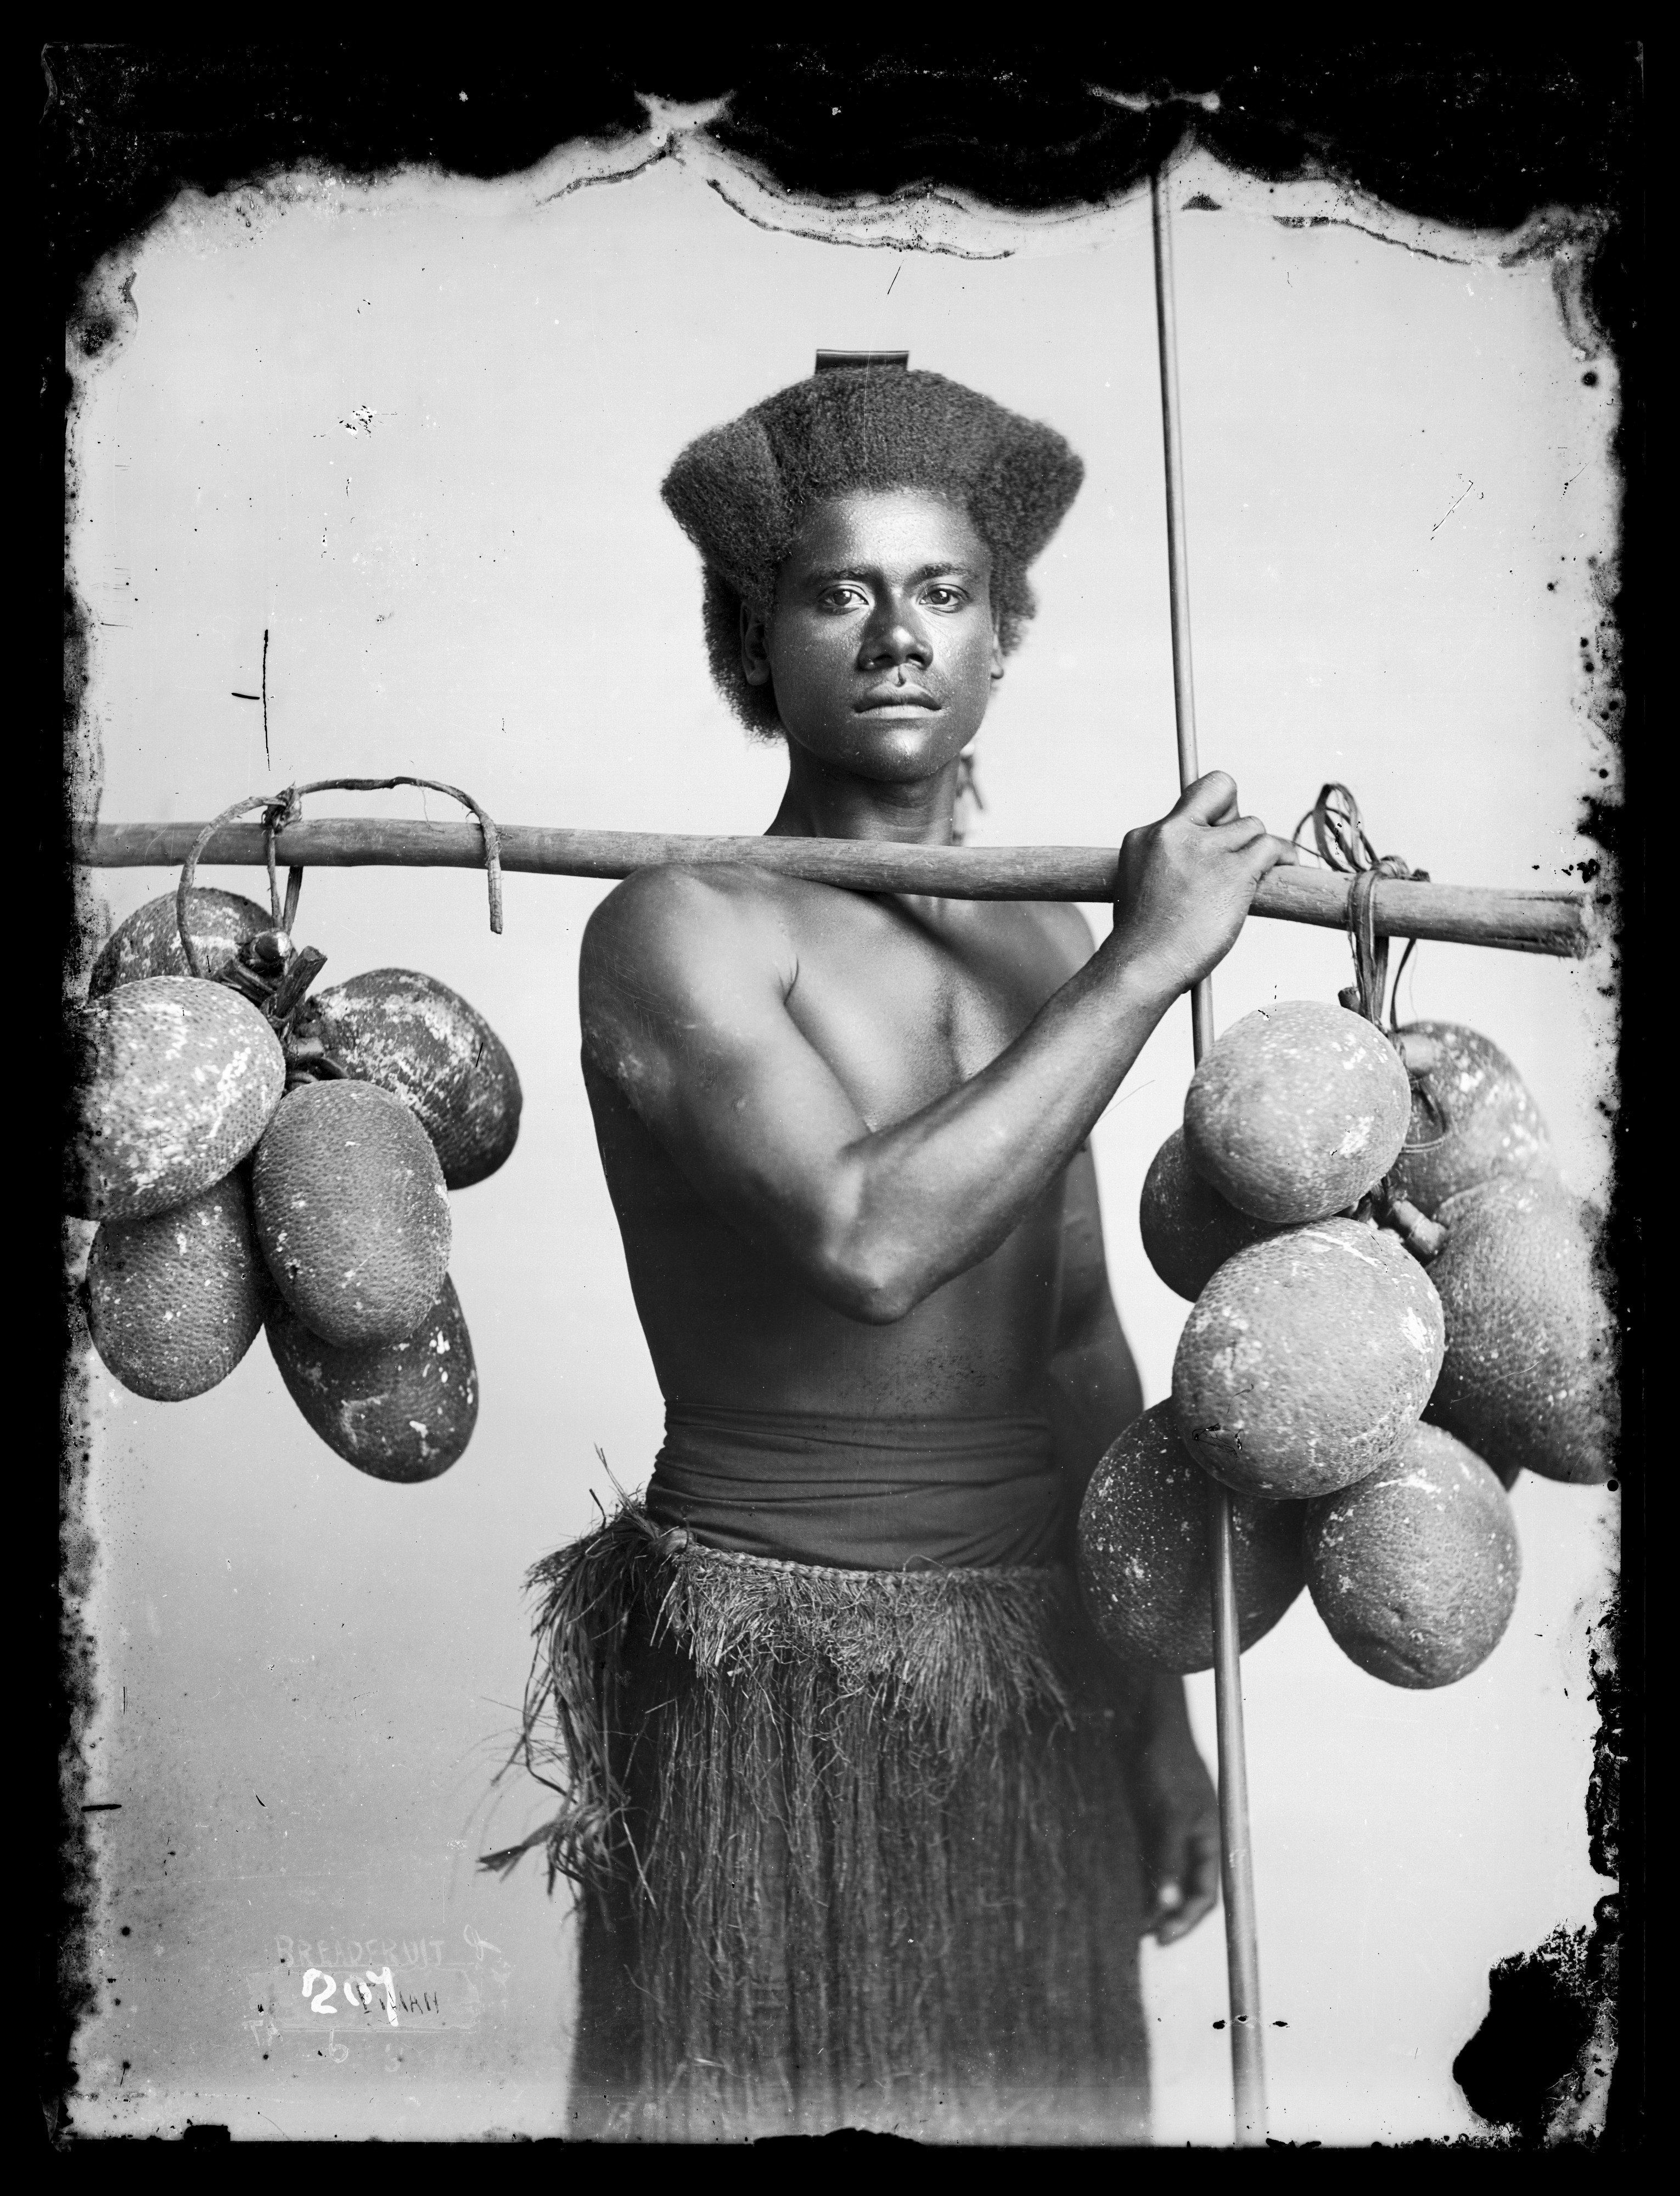 Fijian man carrying breadfruit, photograph by Thomas Andrew